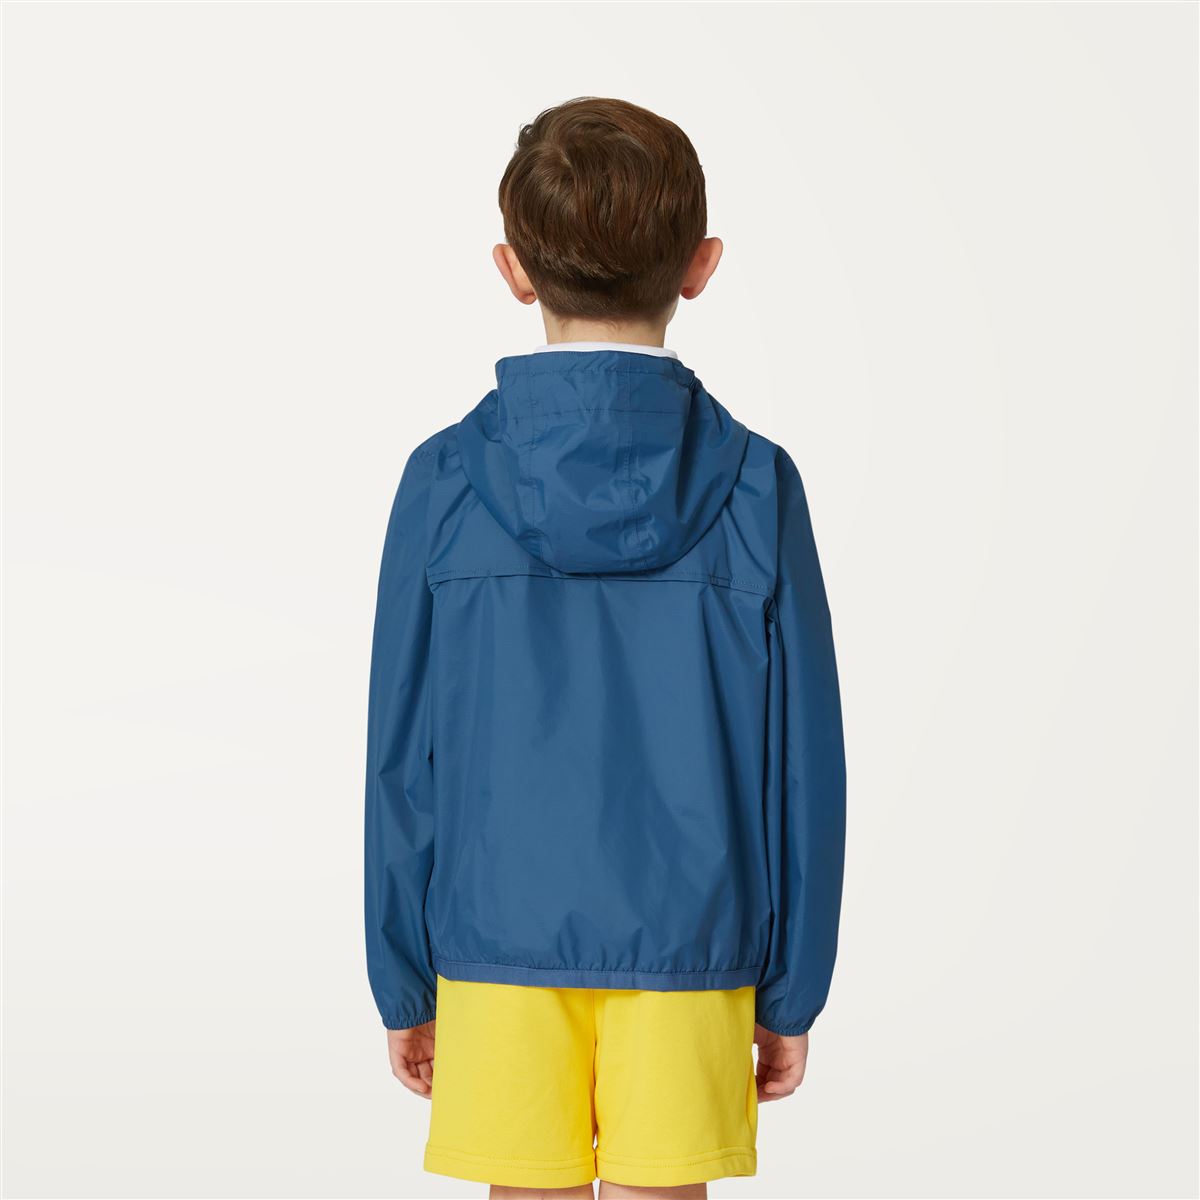 Claude - Kids Packable Full Zip Rain Jacket in Blue Deep